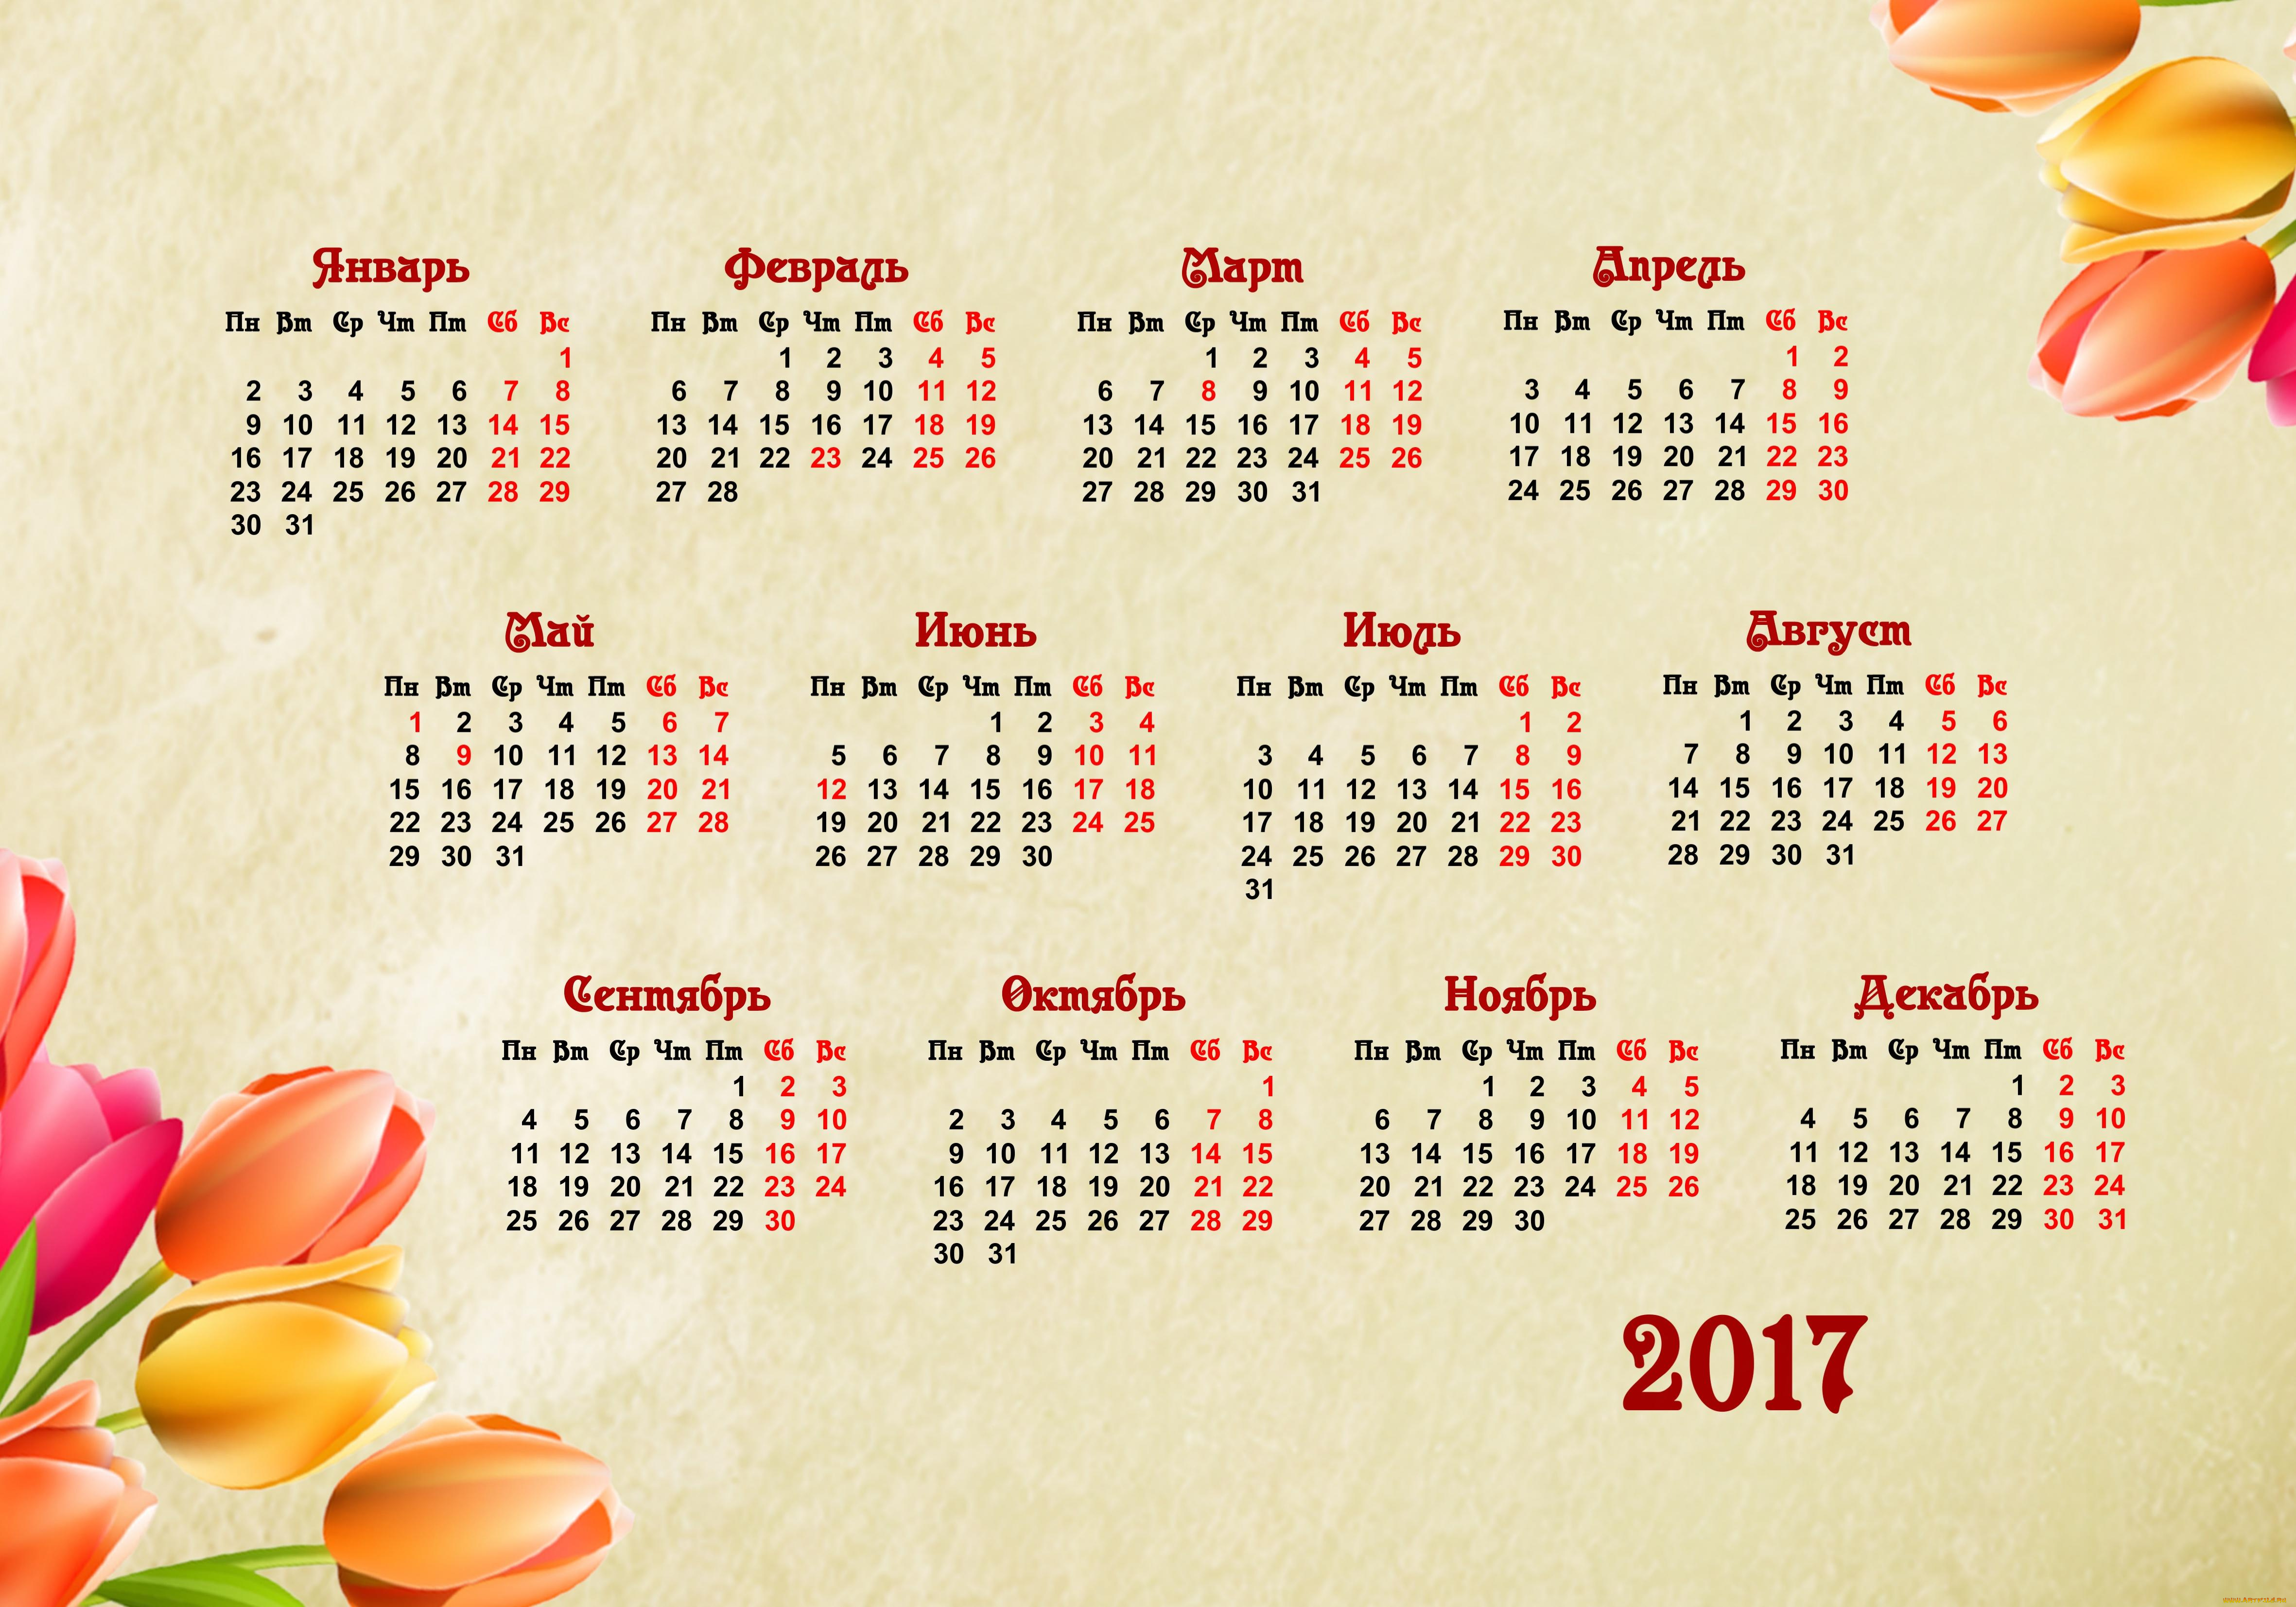 Декабря 2017 года. Календарь 2017. Календарик 2017 год. Календарь за 2017г. Календарная сетка на 2017 год.